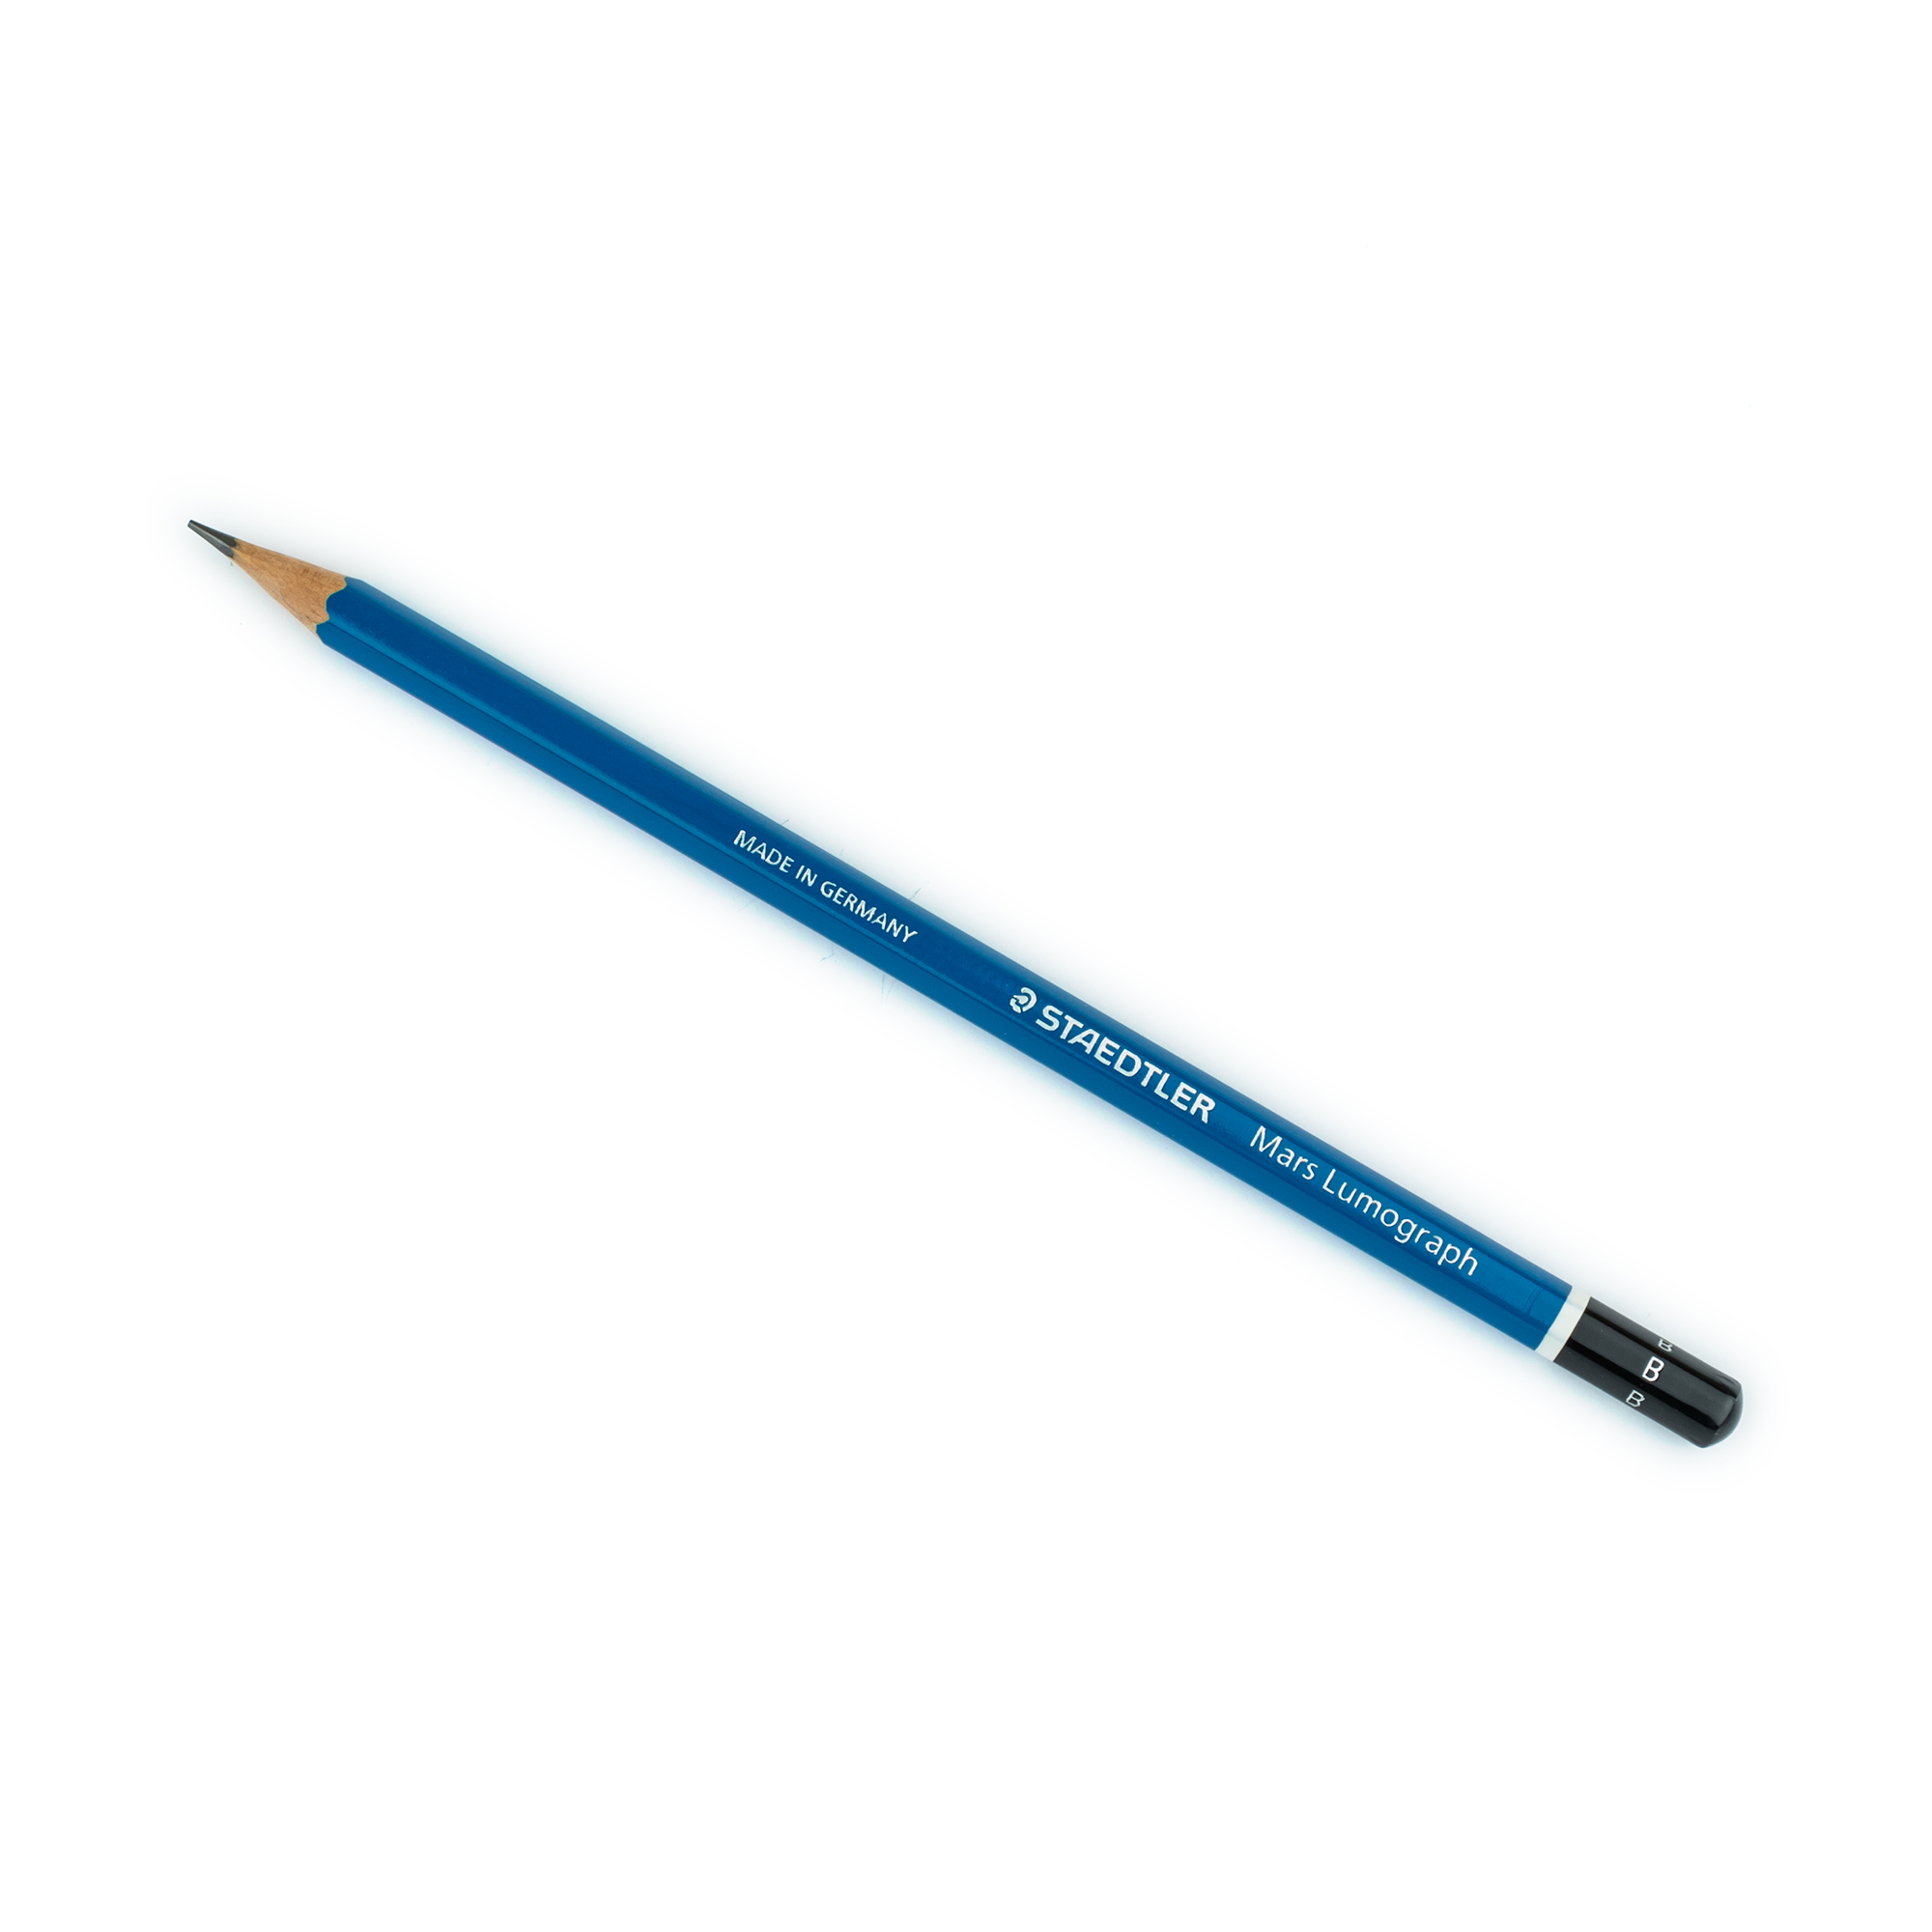 b pencil